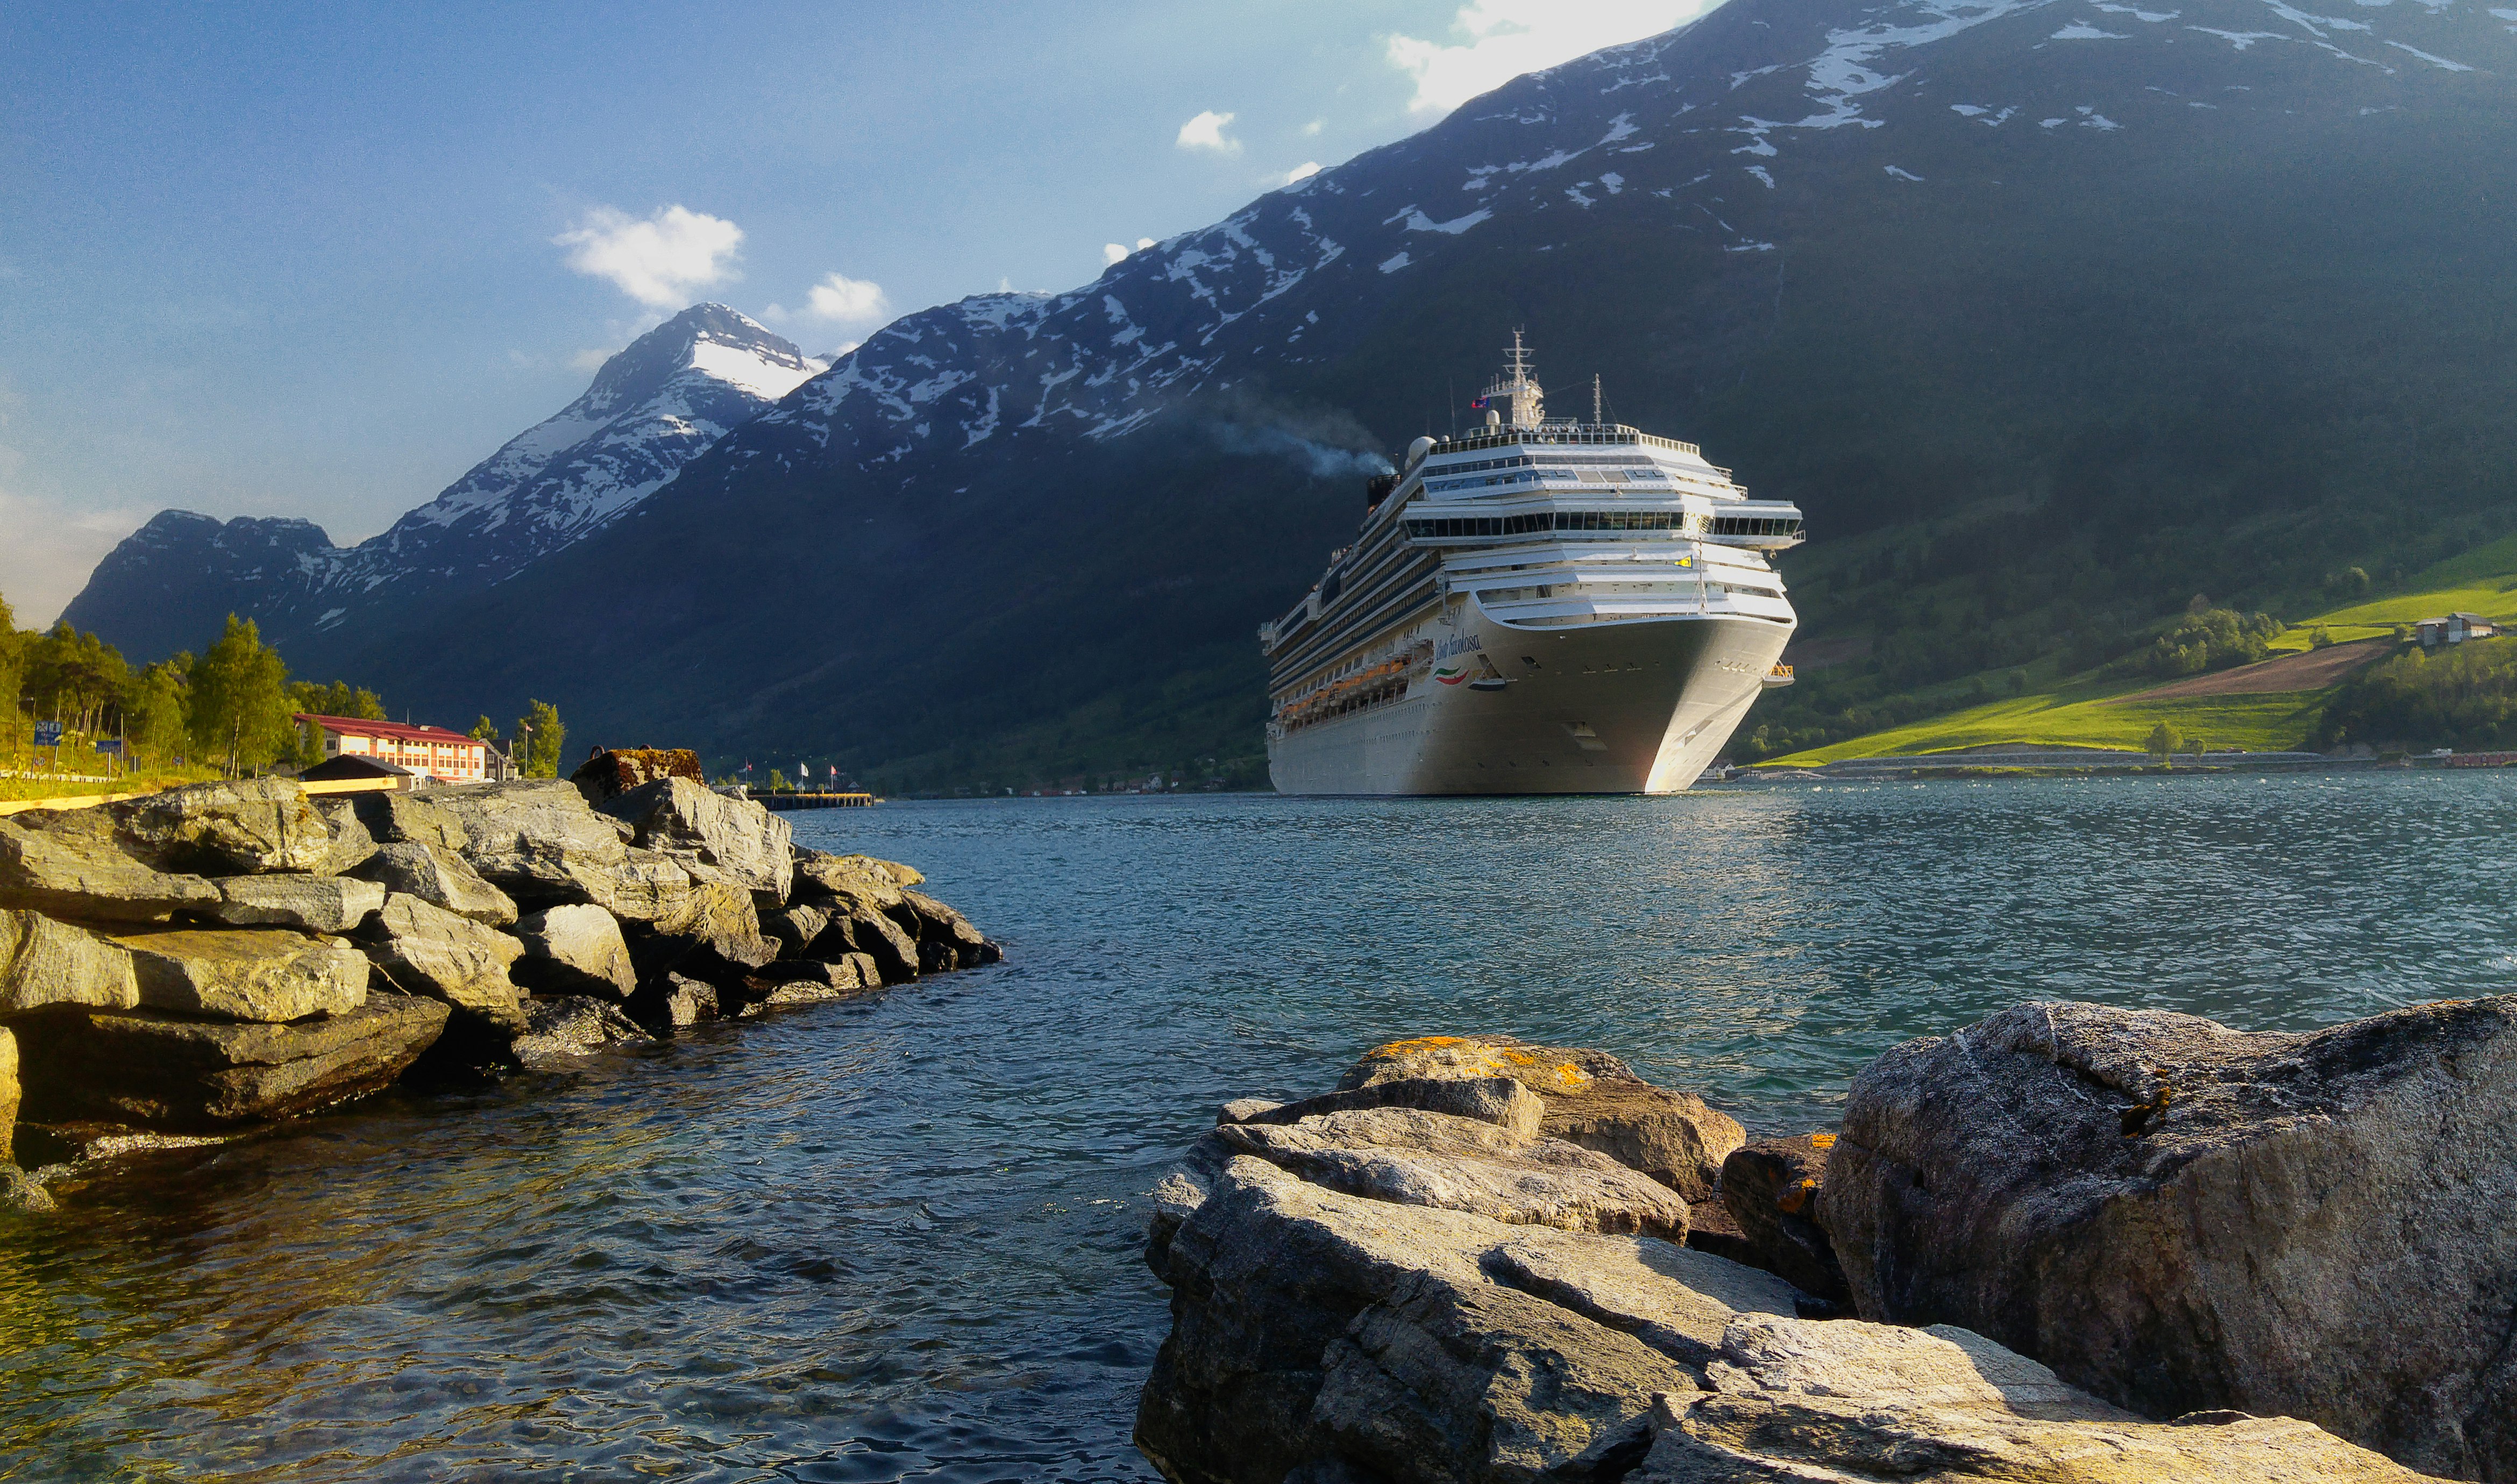 white cruise ship on water near rocky mountain during daytime